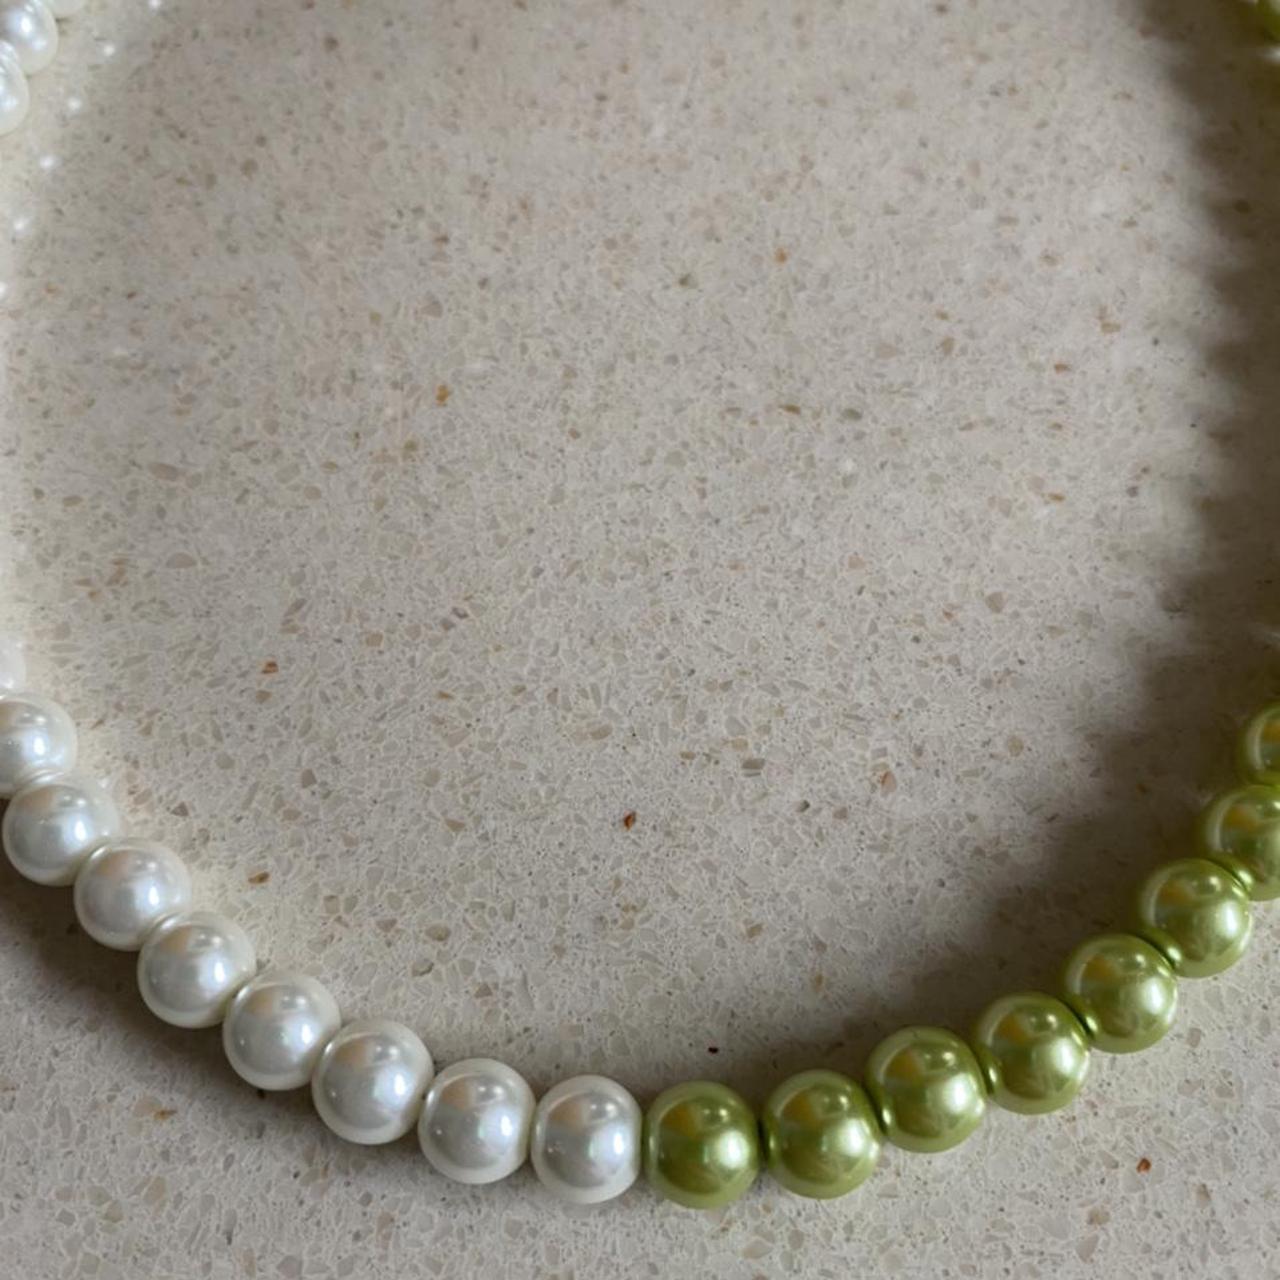 Women's White and Green Jewellery (3)